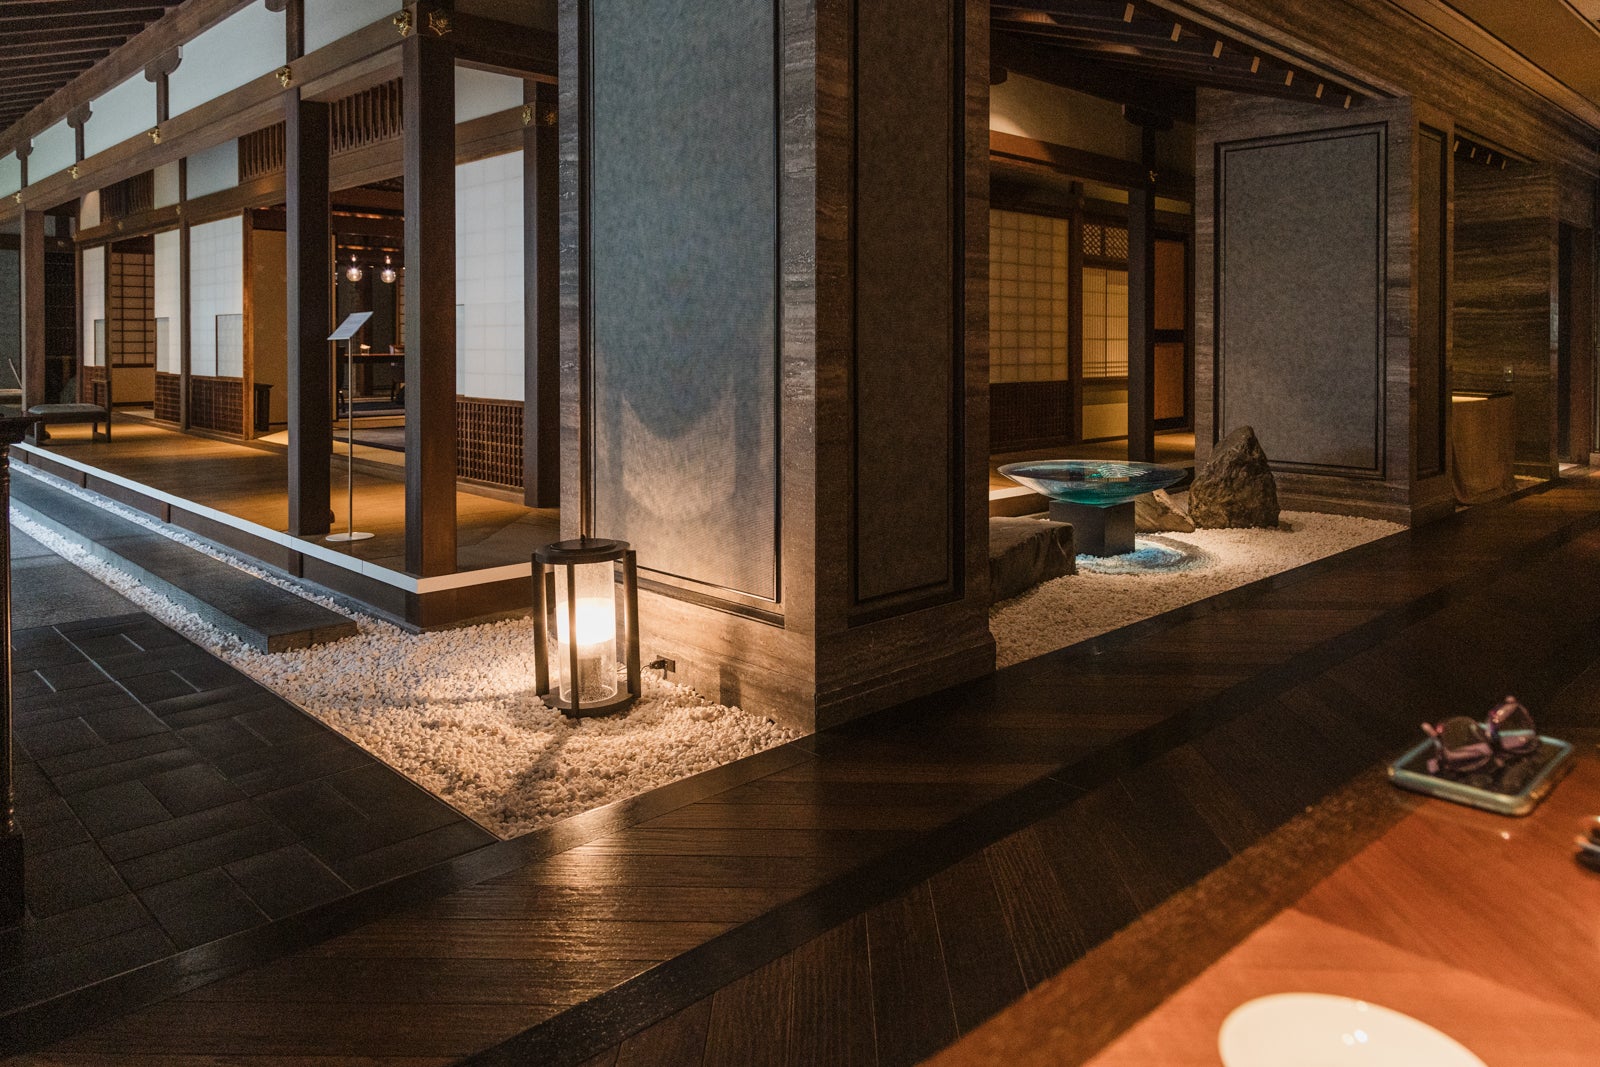 La Locanda dining room at The Ritz-Carlton, Kyoto